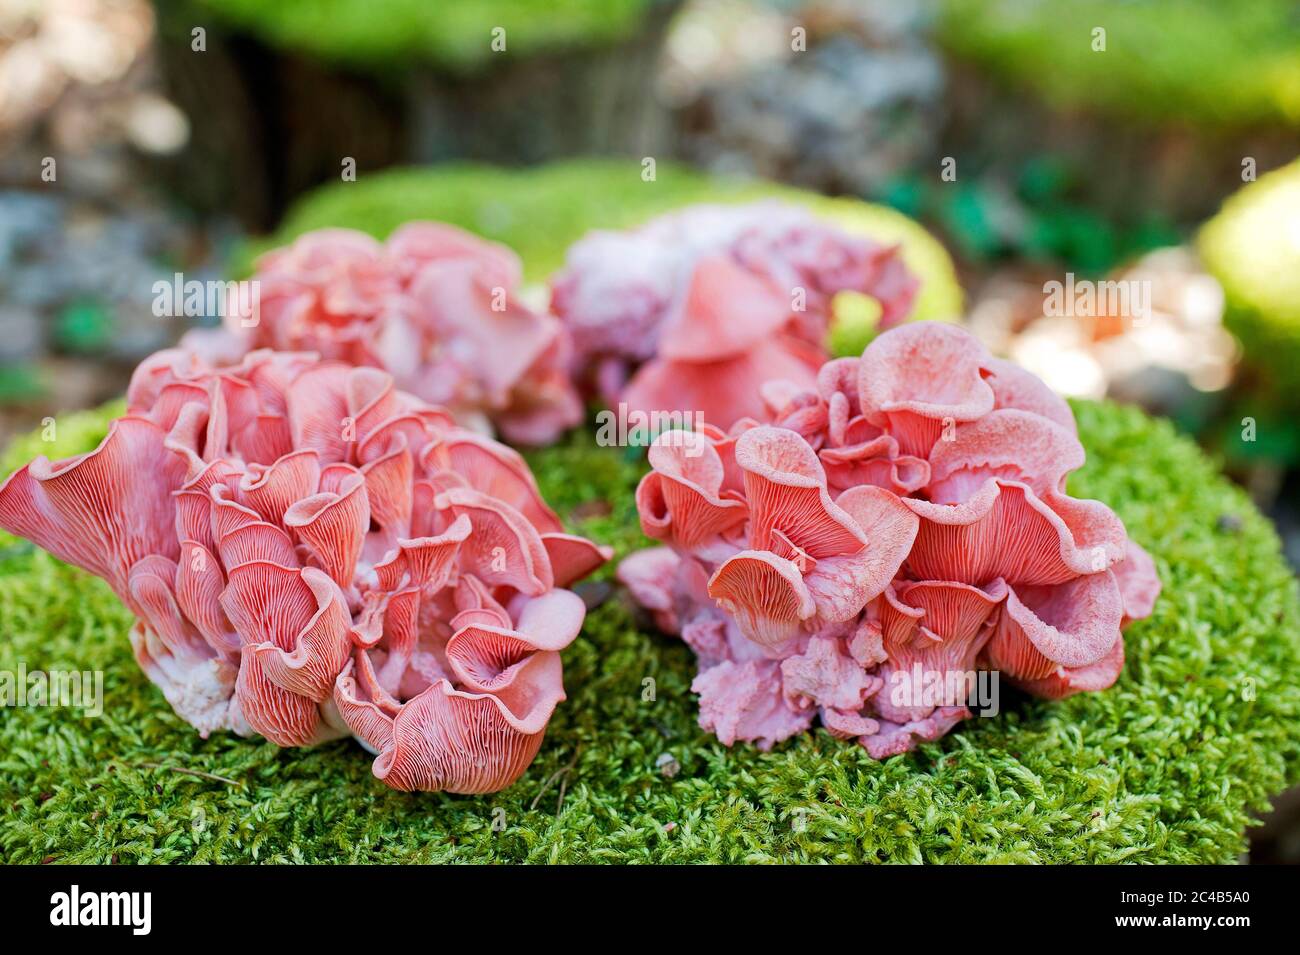 Pink oyster mushrooms (Pleurotus djamor), cultivated mushrooms, Germany Stock Photo